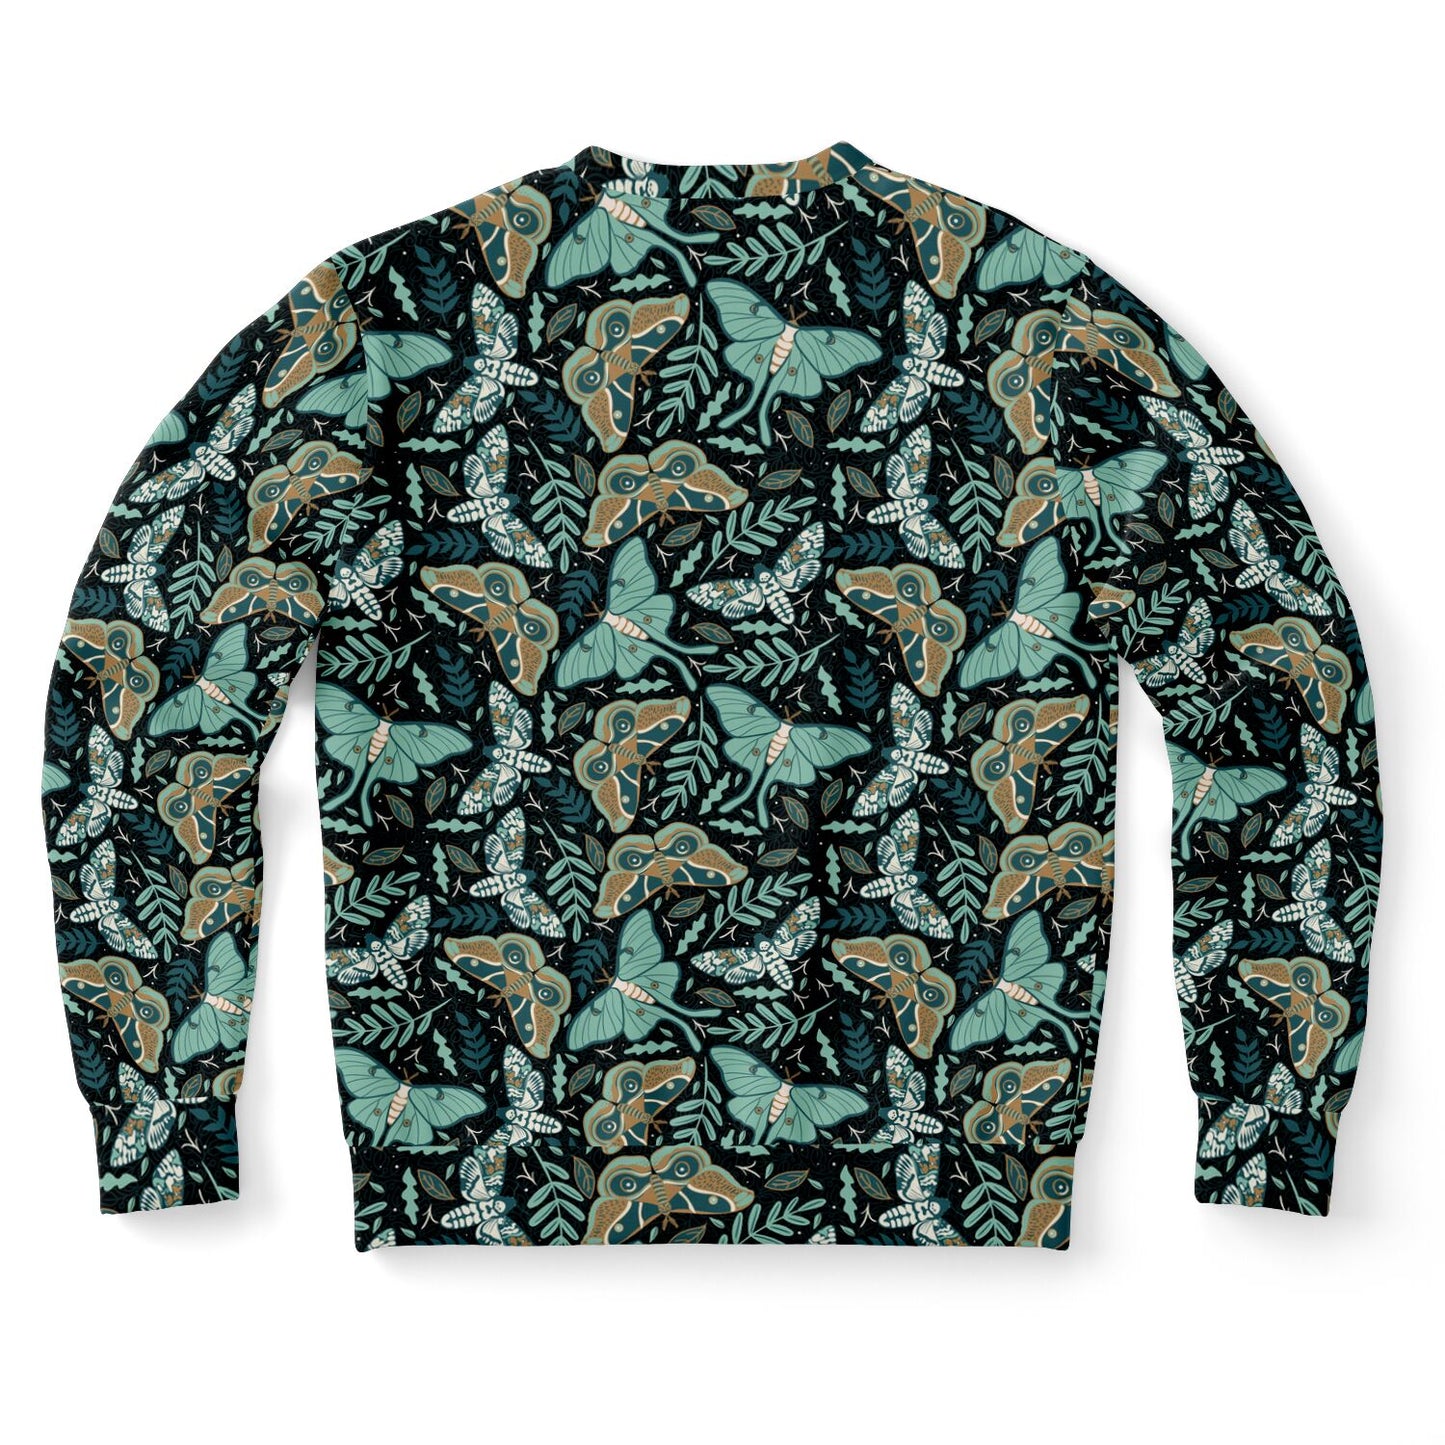 Cottage-core butterflies sweatshirt